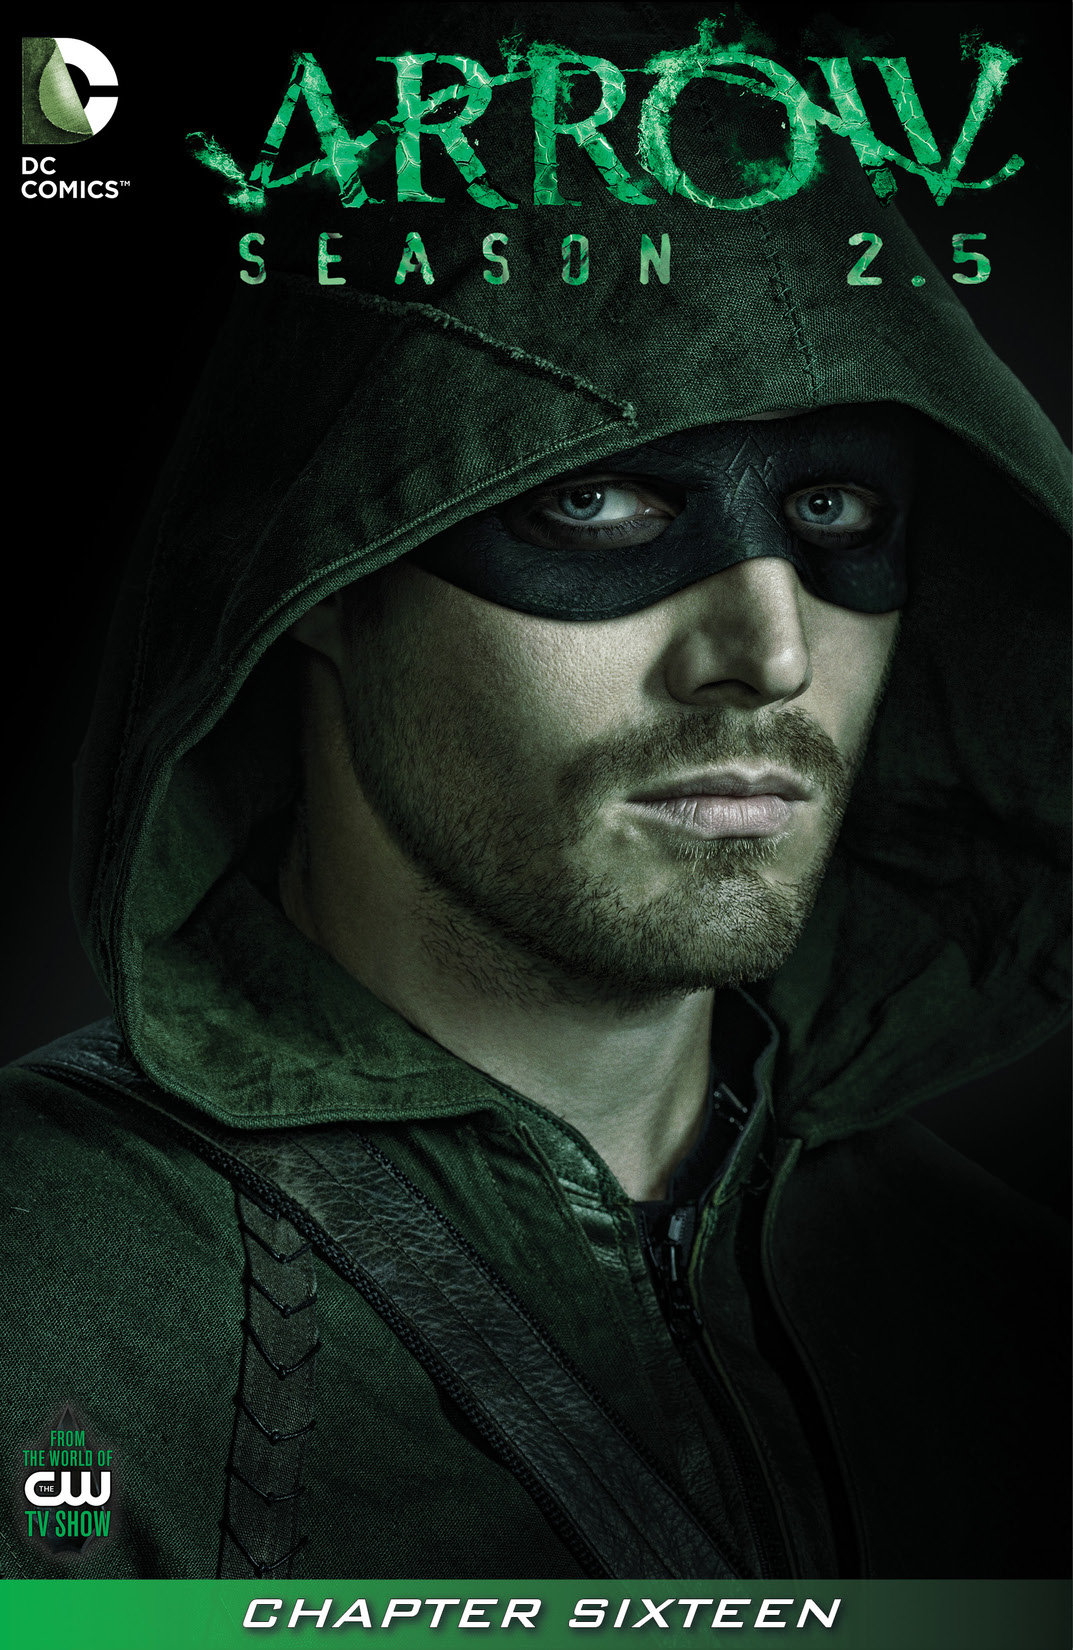 Arrow: Season 2.5 #16 preview images